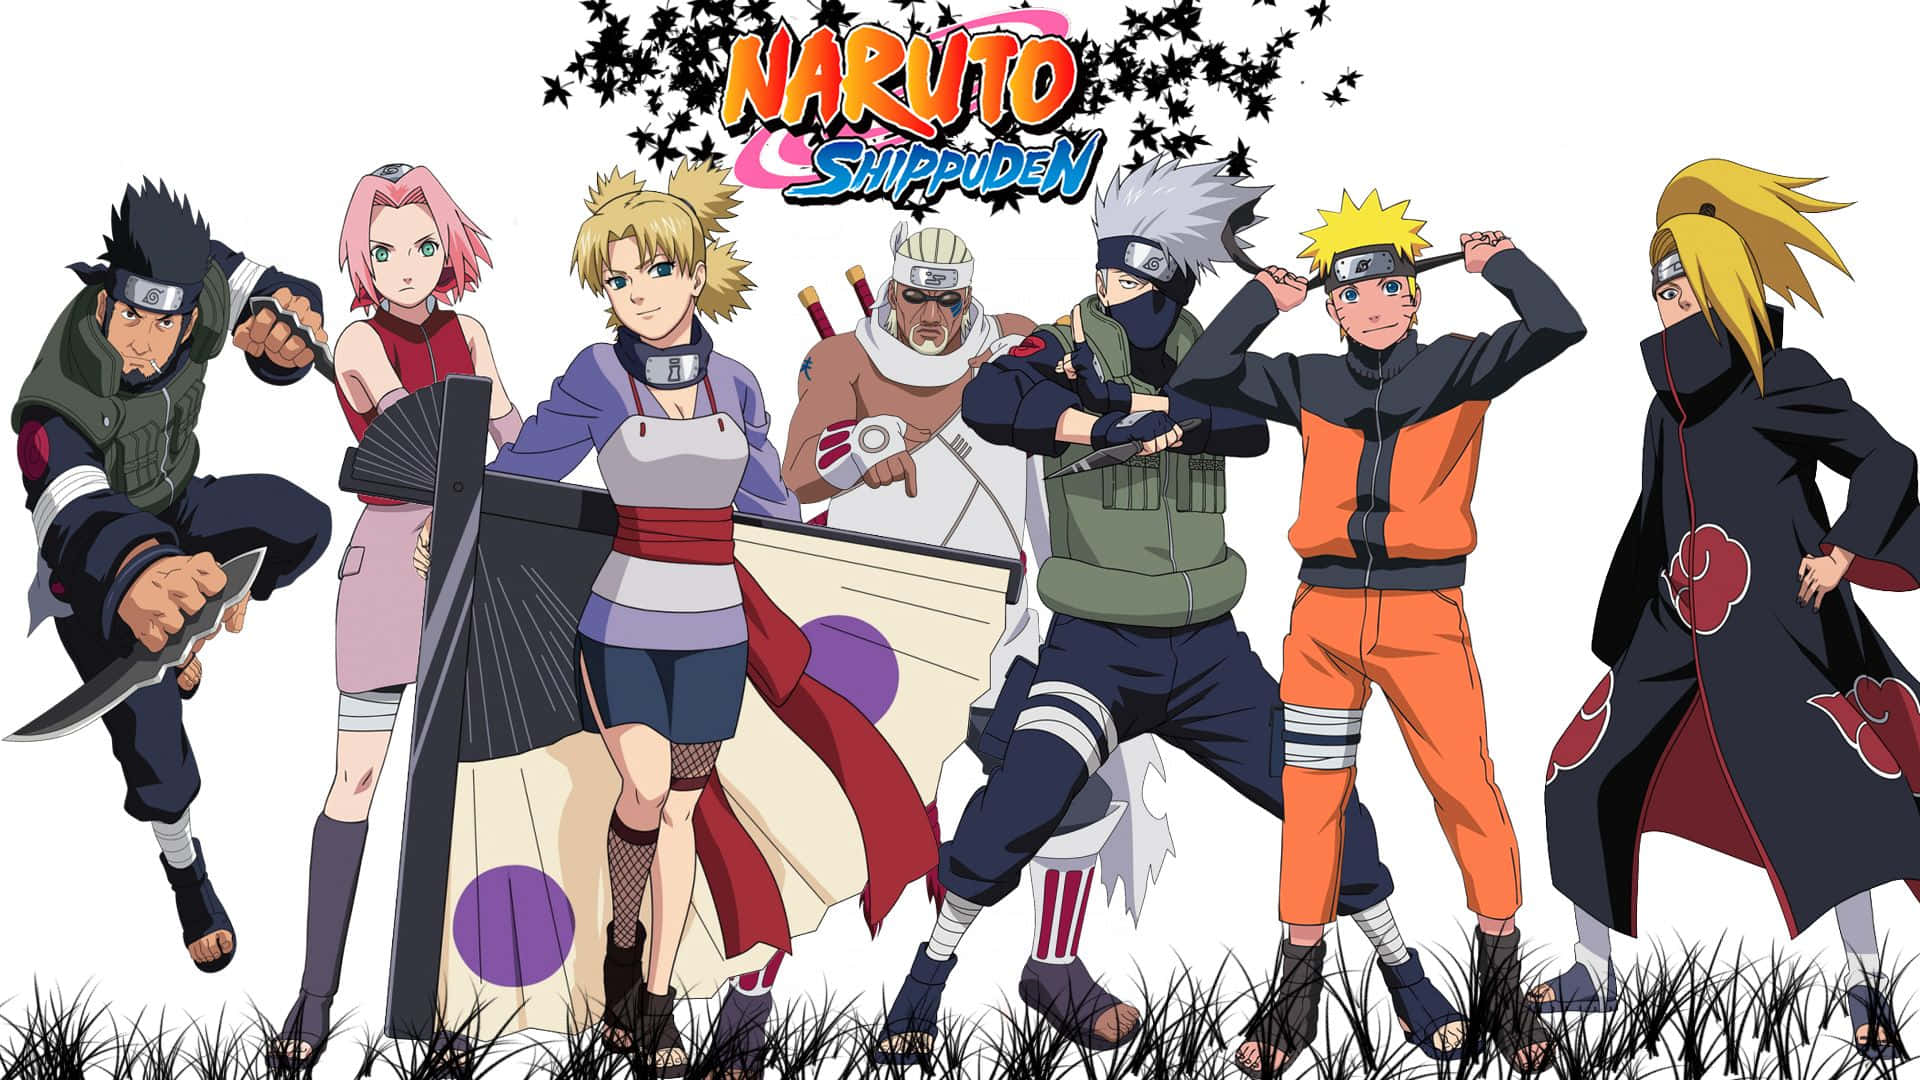 Narutoshippuden Manga Anime Poster Art = Naruto Shippuden Manga Anime Posterkonst Wallpaper